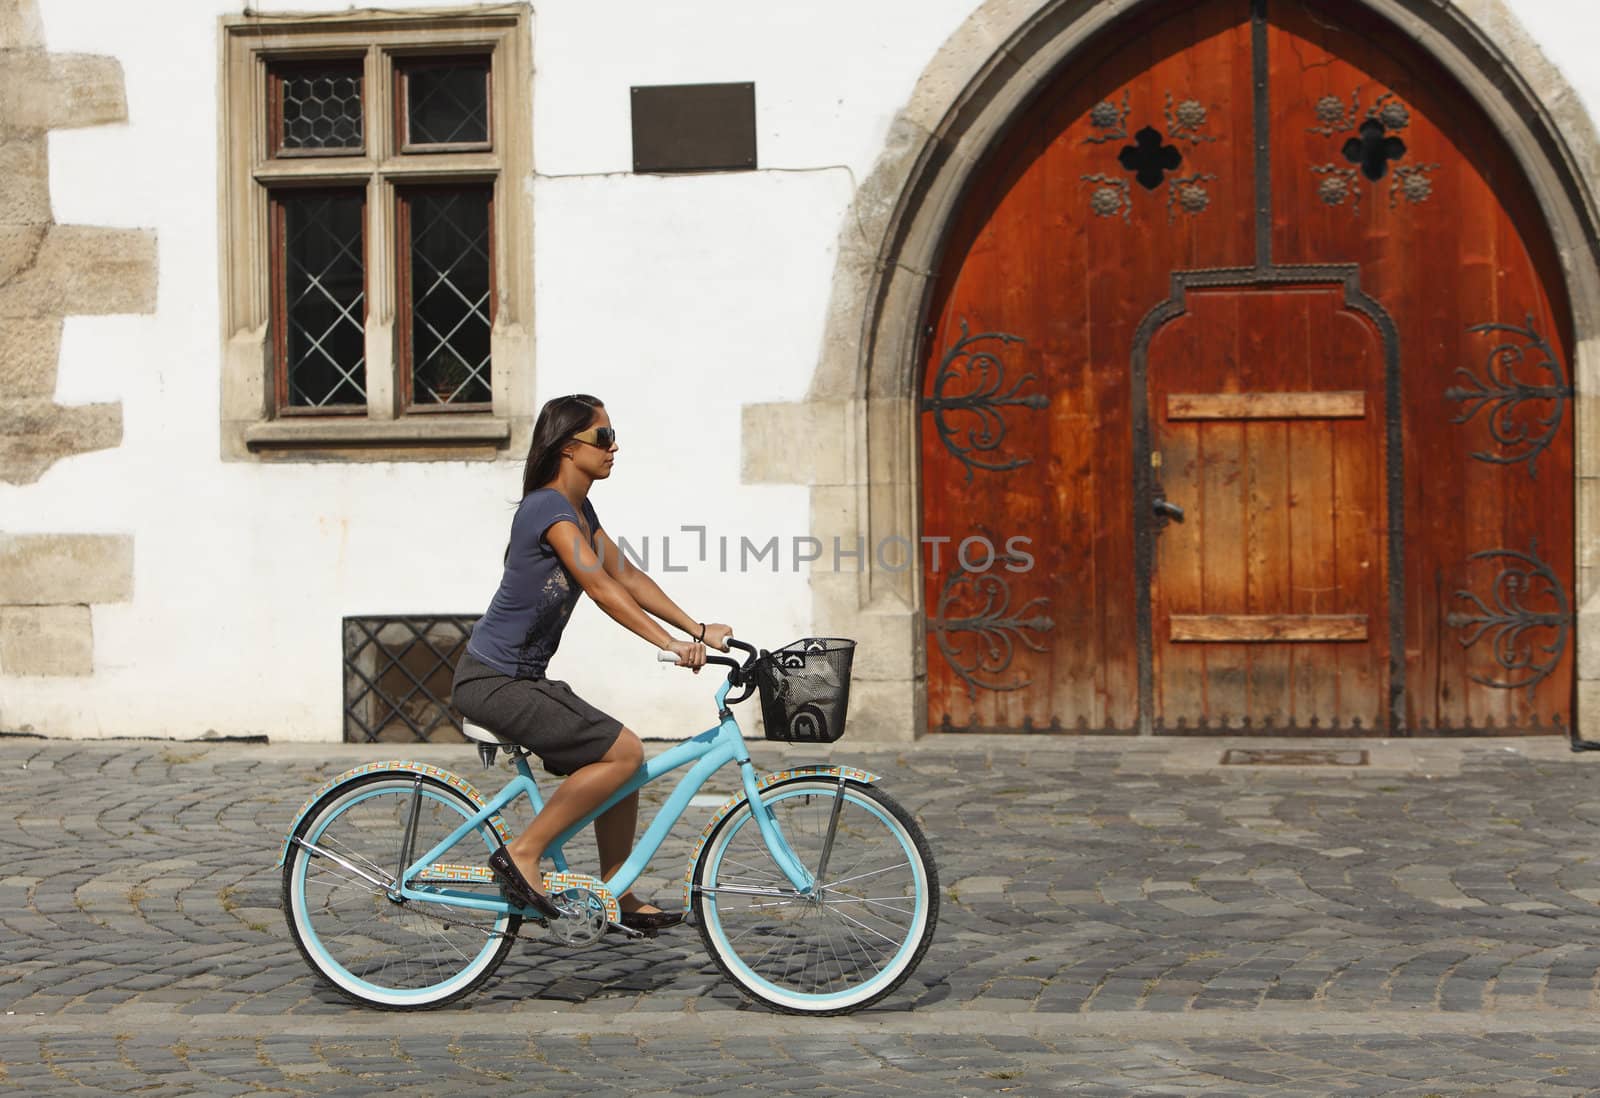 Urban cycling by RazvanPhotography